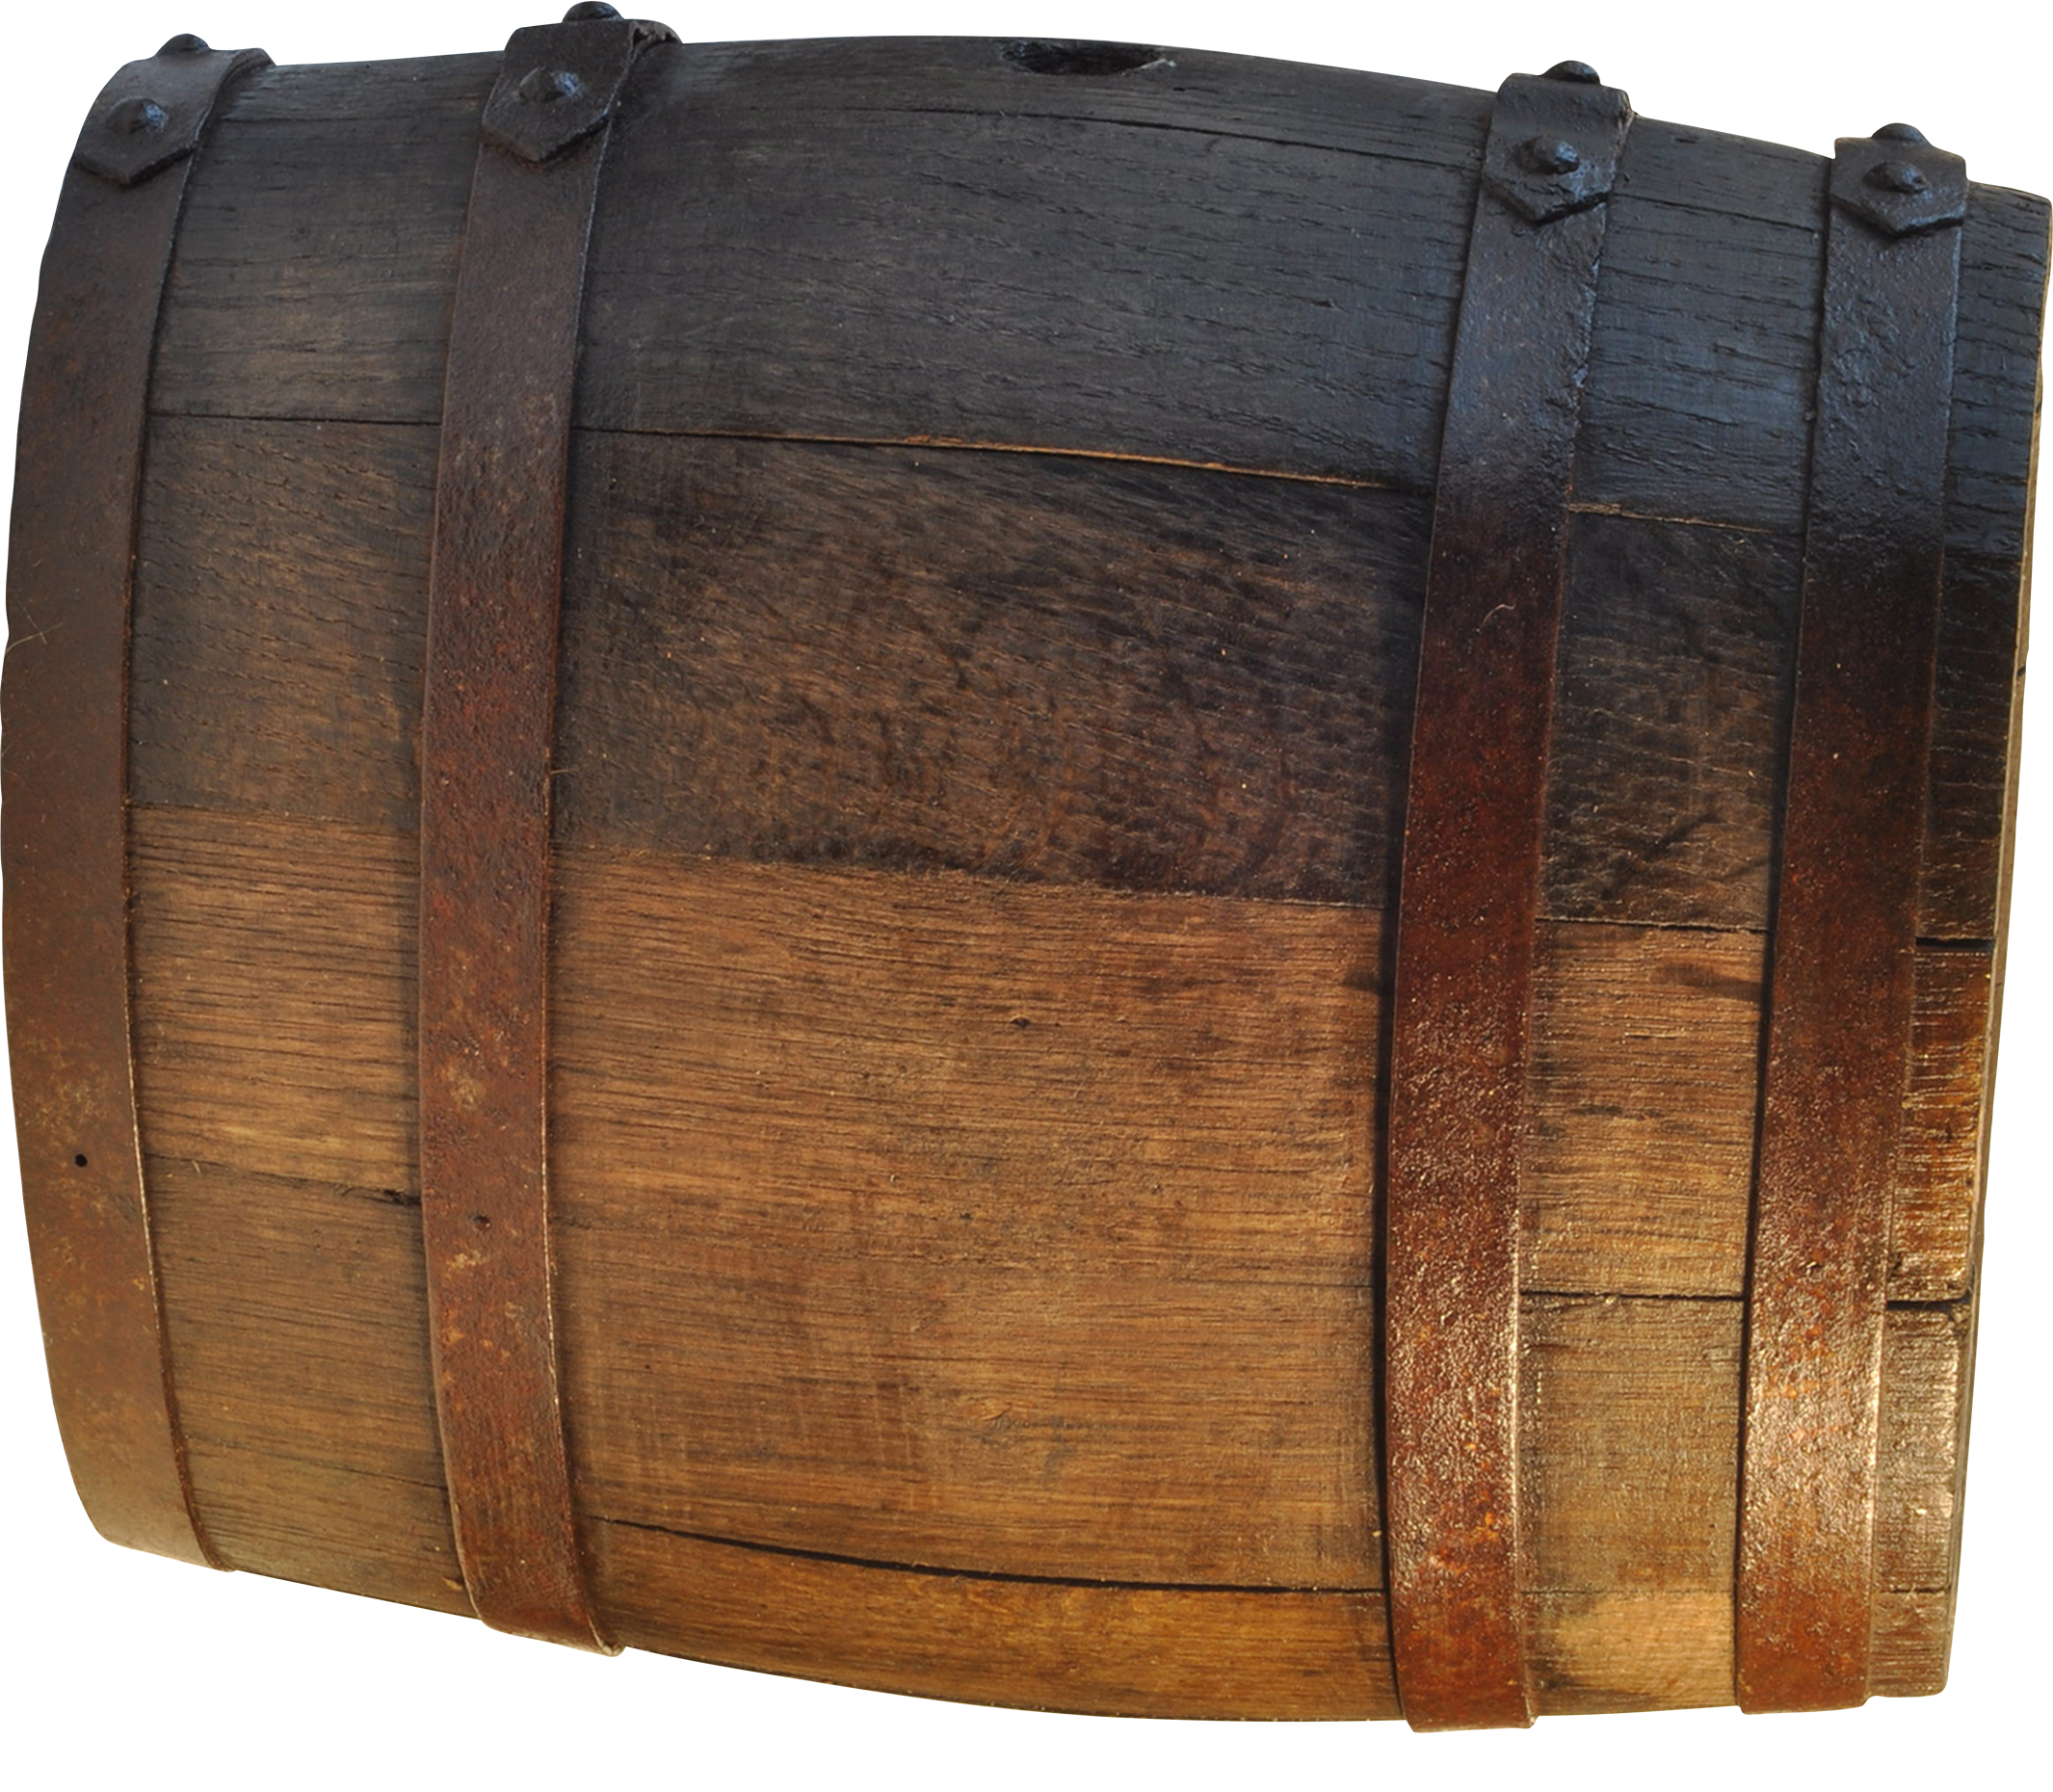 Barrel PNG image